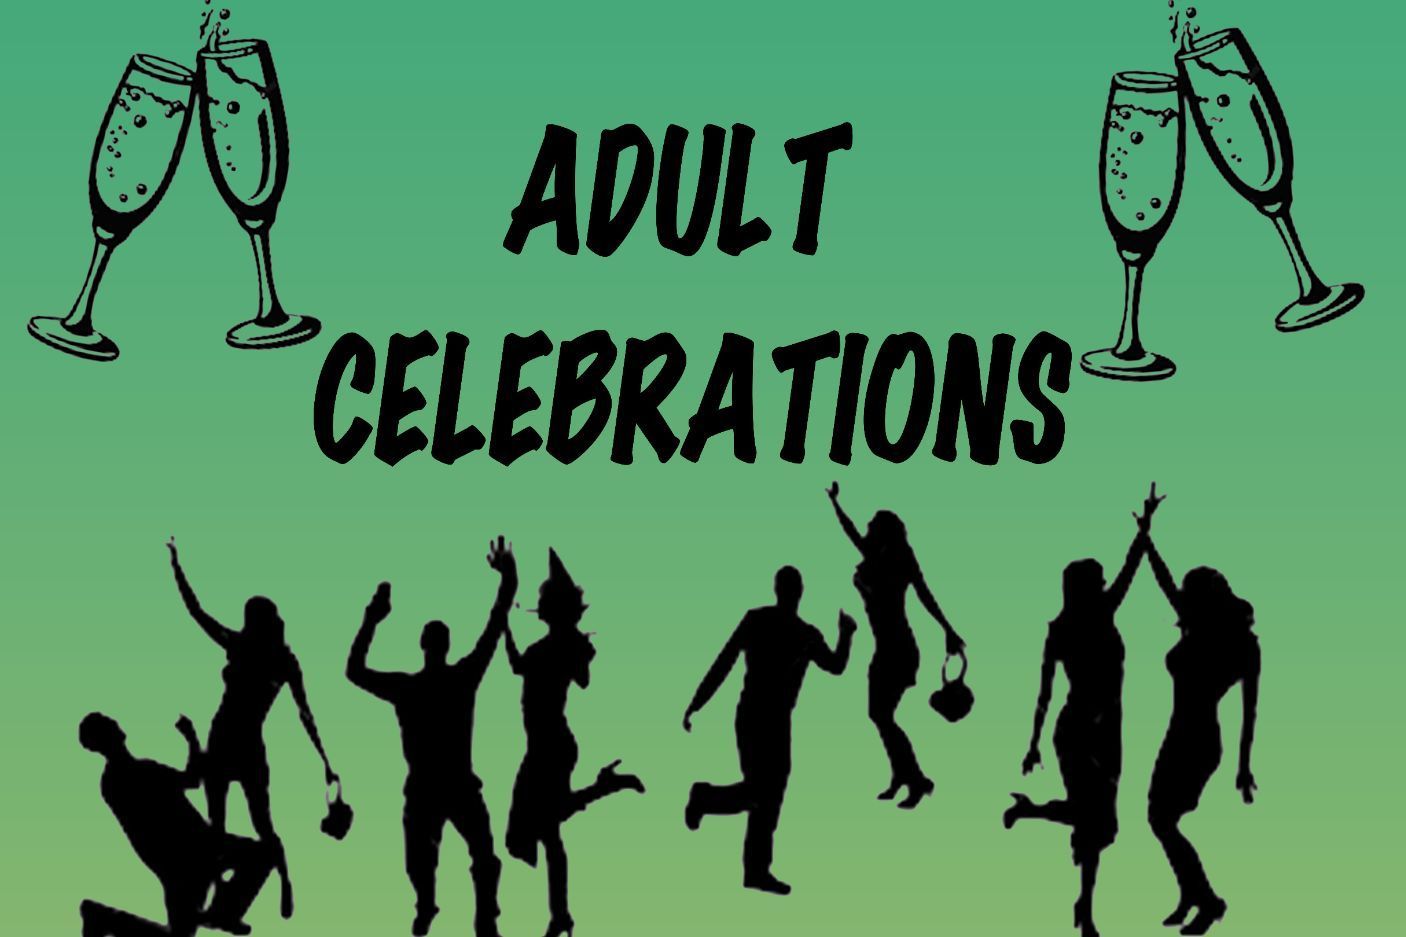 5hr+ / "All Day" Adult Parties/Celebrations portfolio